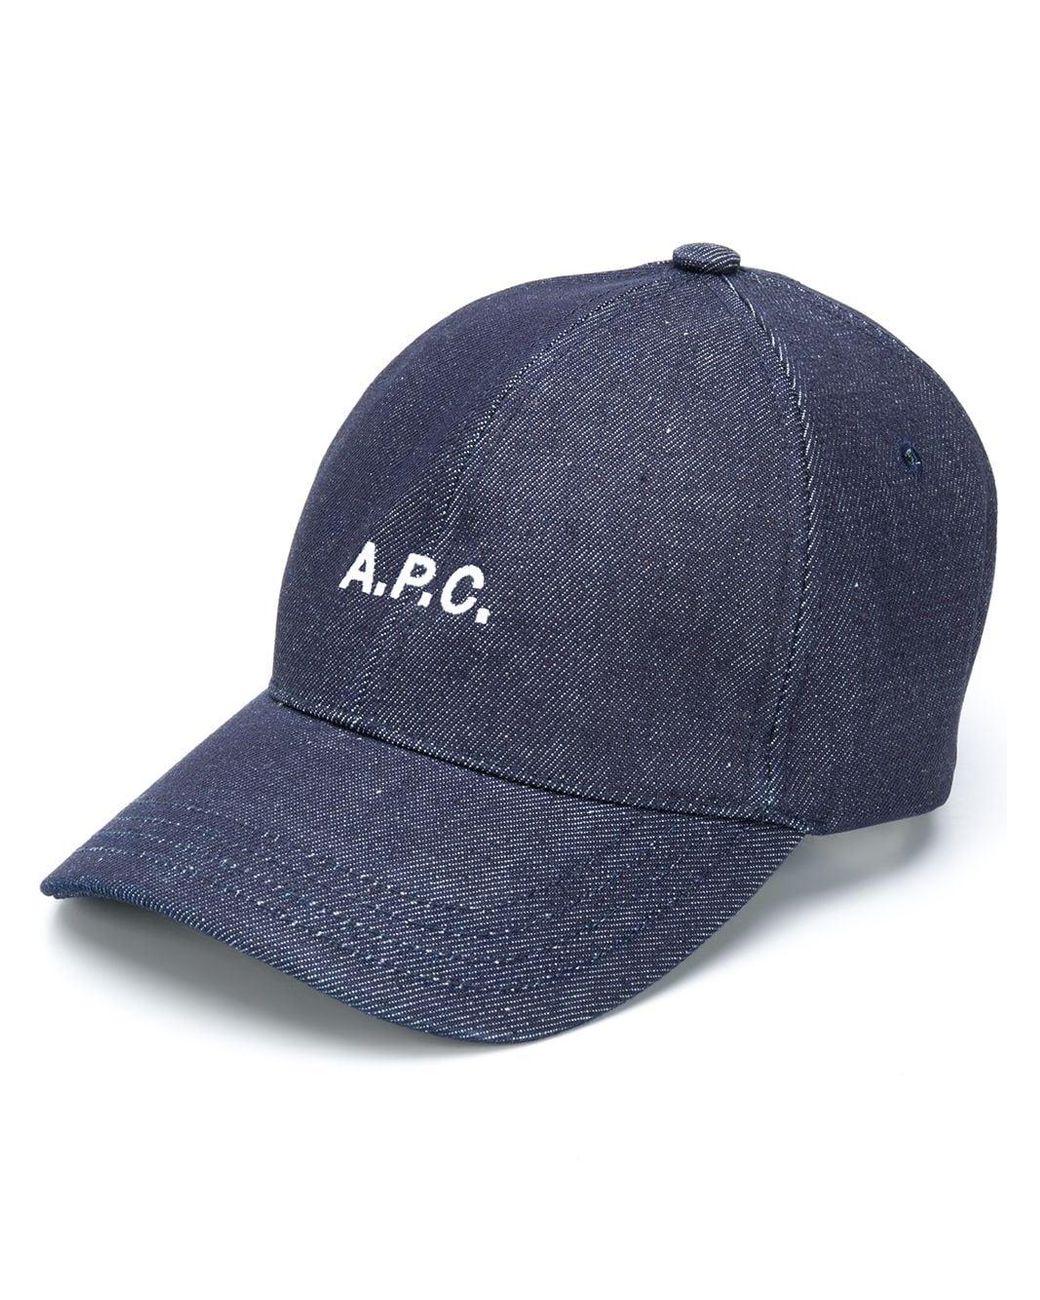 A.P.C. Embroidered Logo Denim Cap in Blue for Men - Lyst